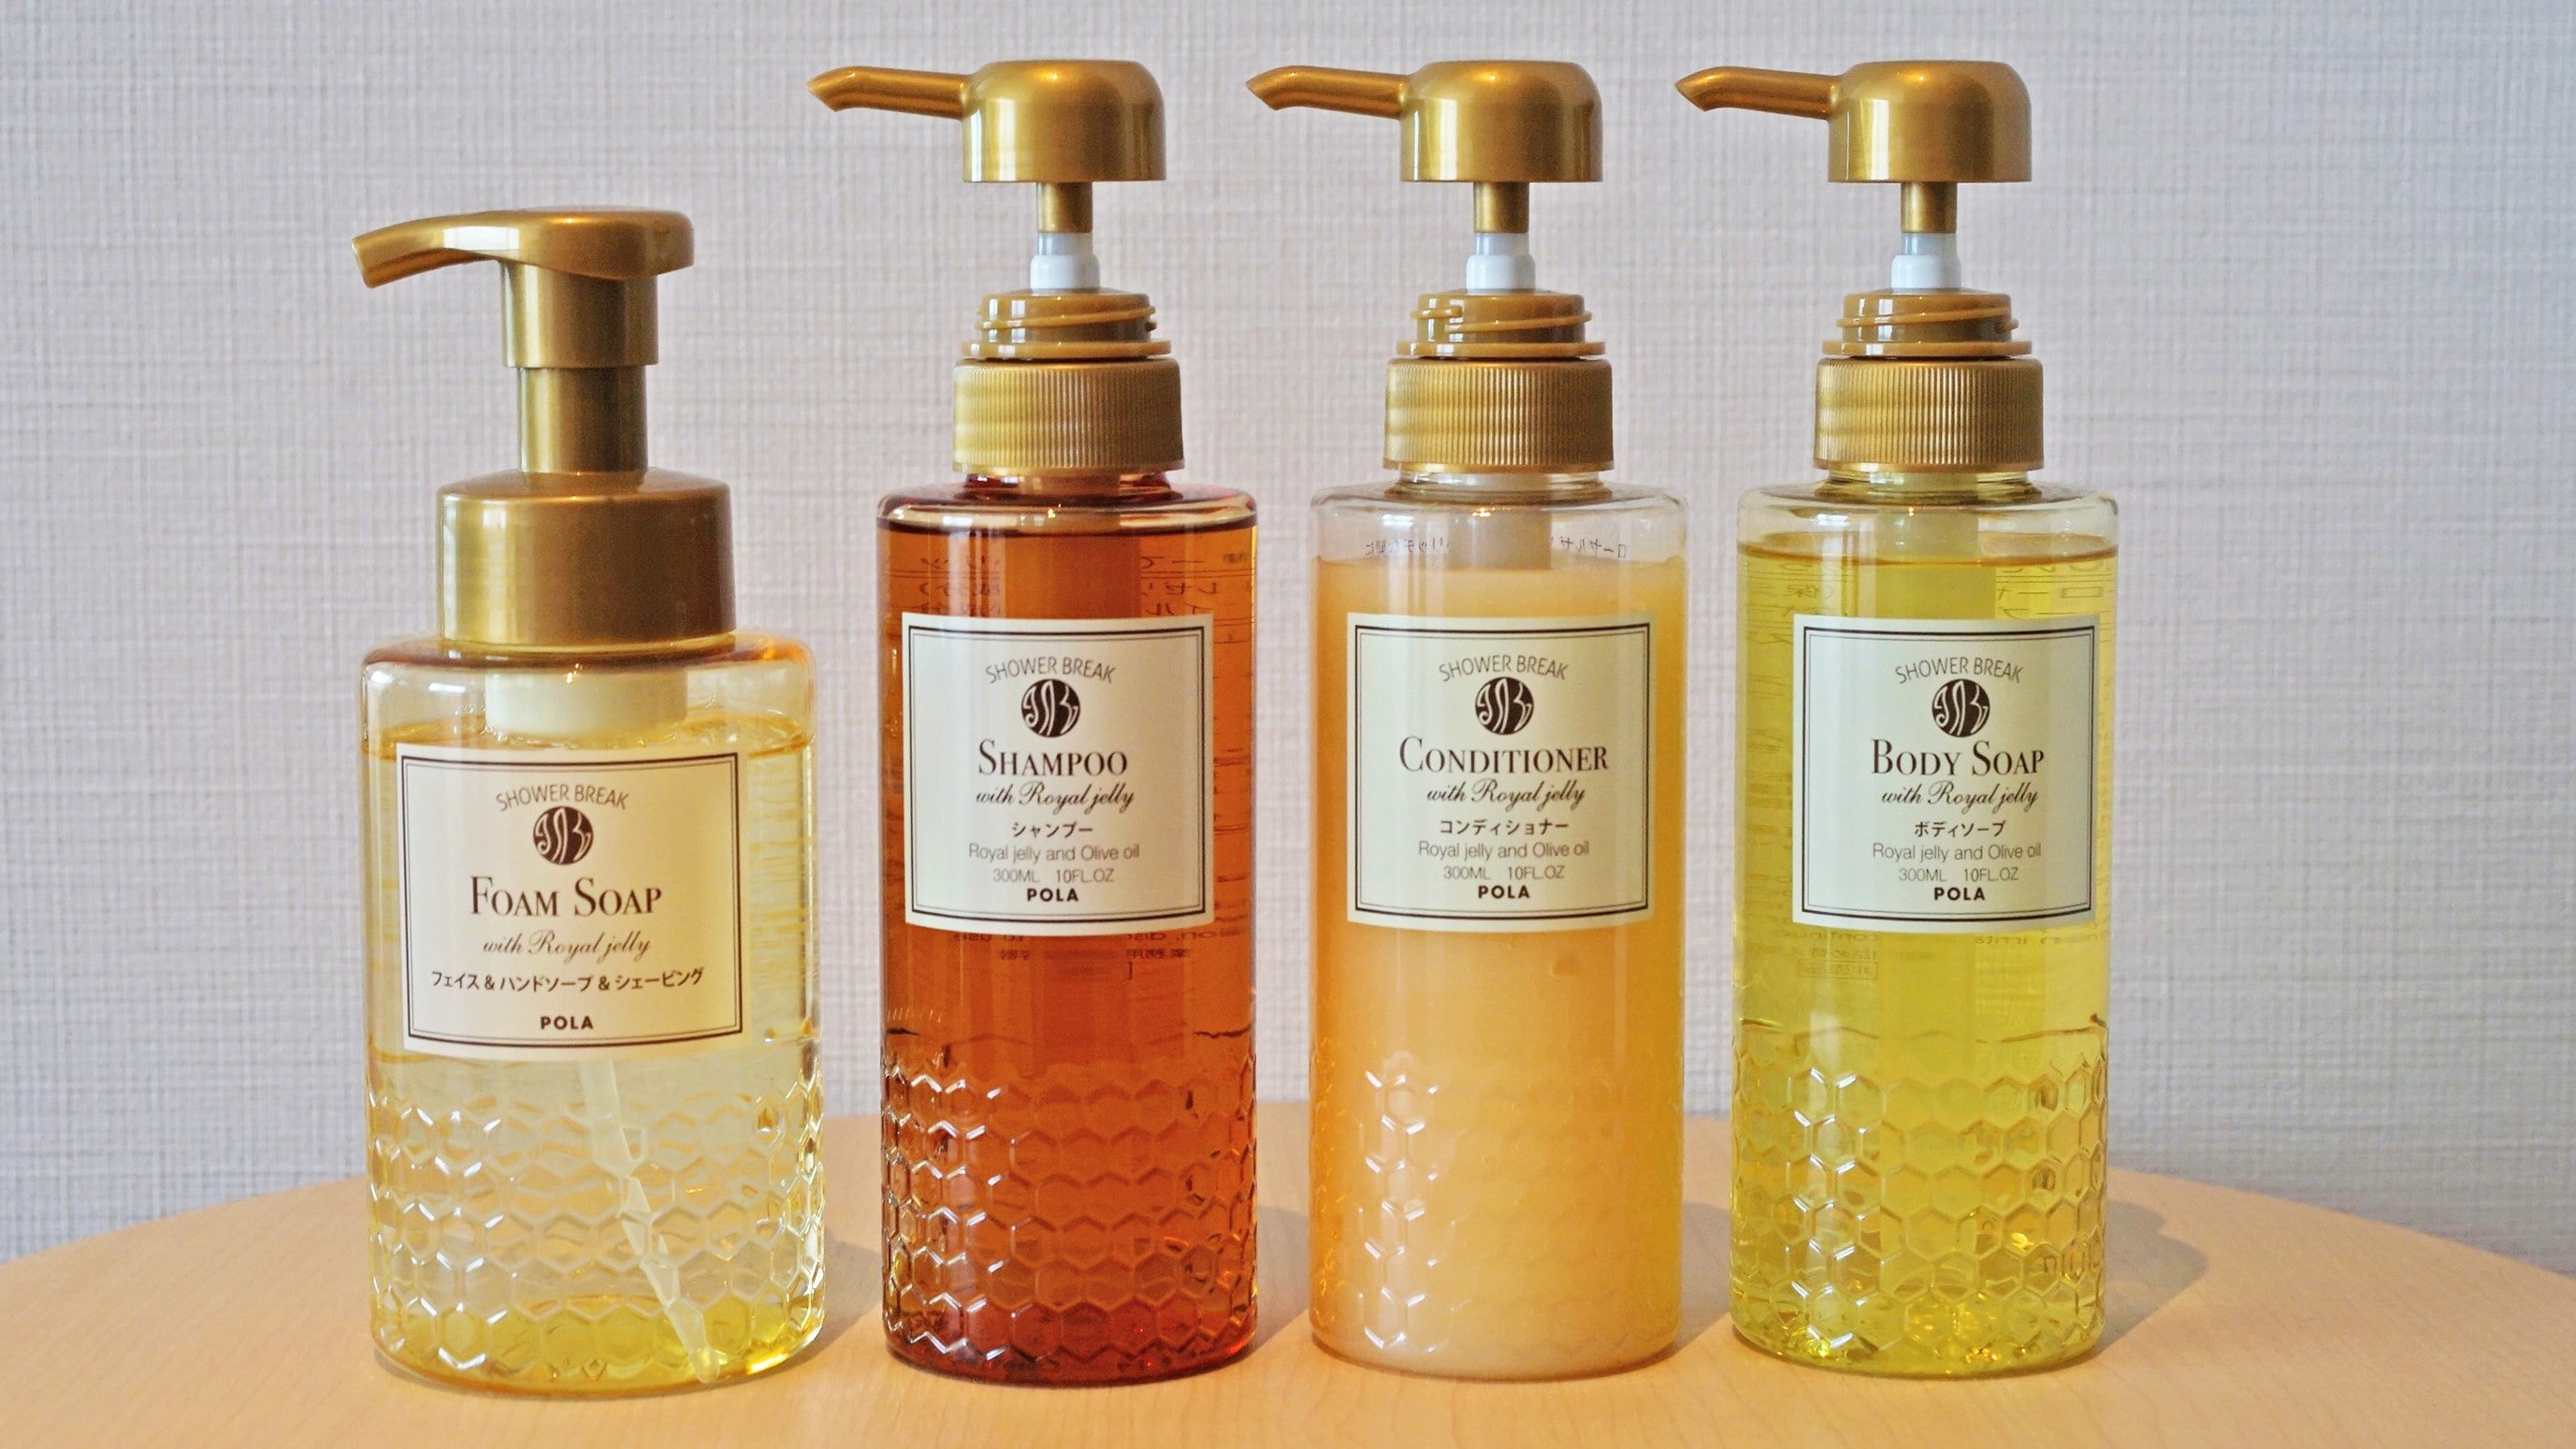 Face & amp; Hand Soap / Shampoo / Conditioner / Body Soap